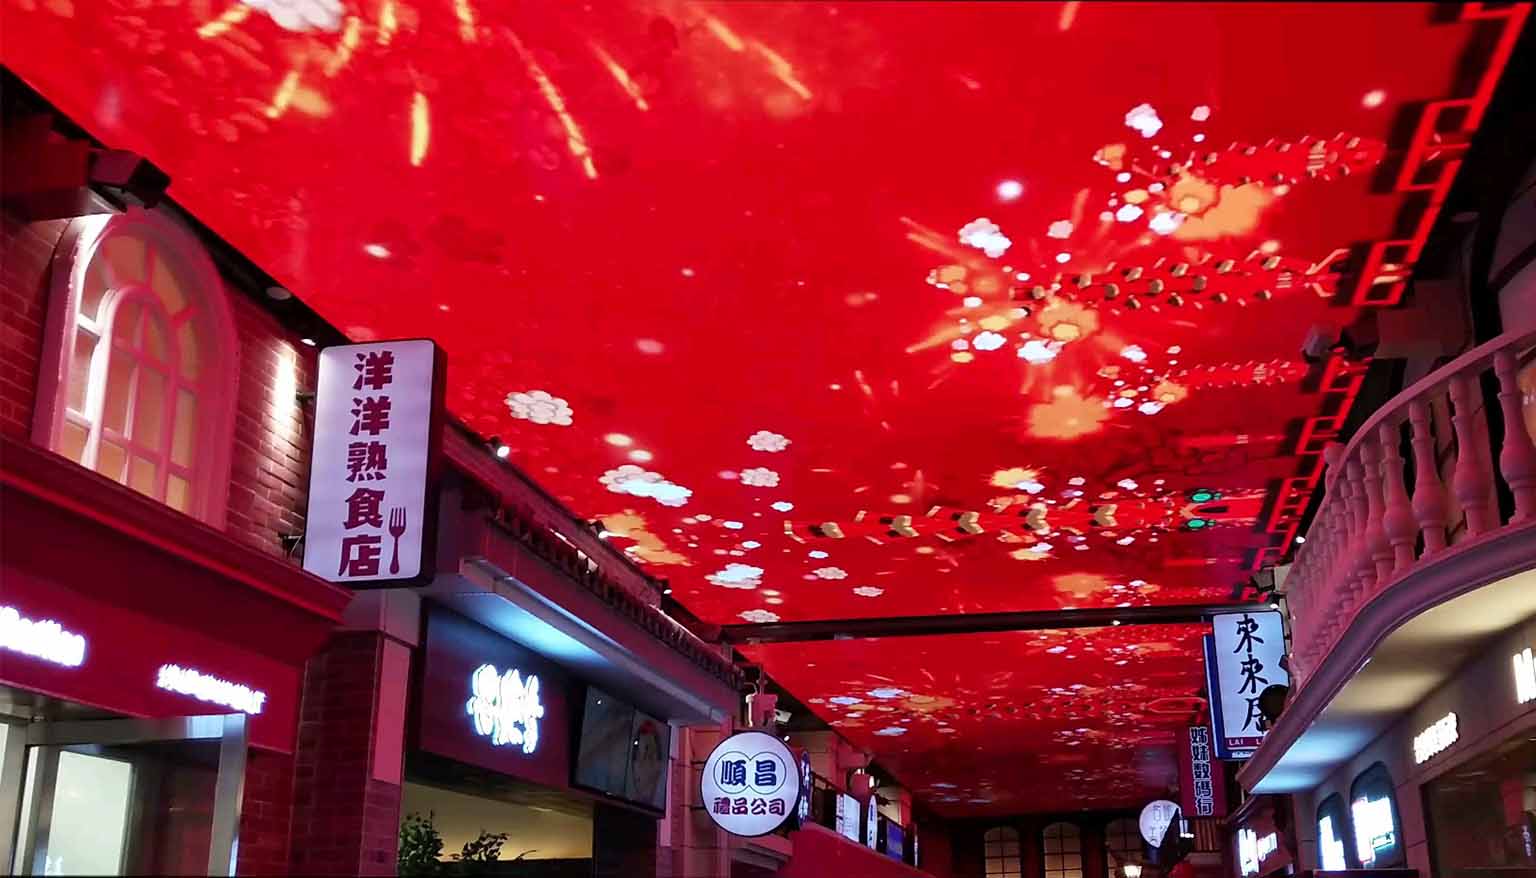 Guiyang Metro-Beijing Station Creative LED Project